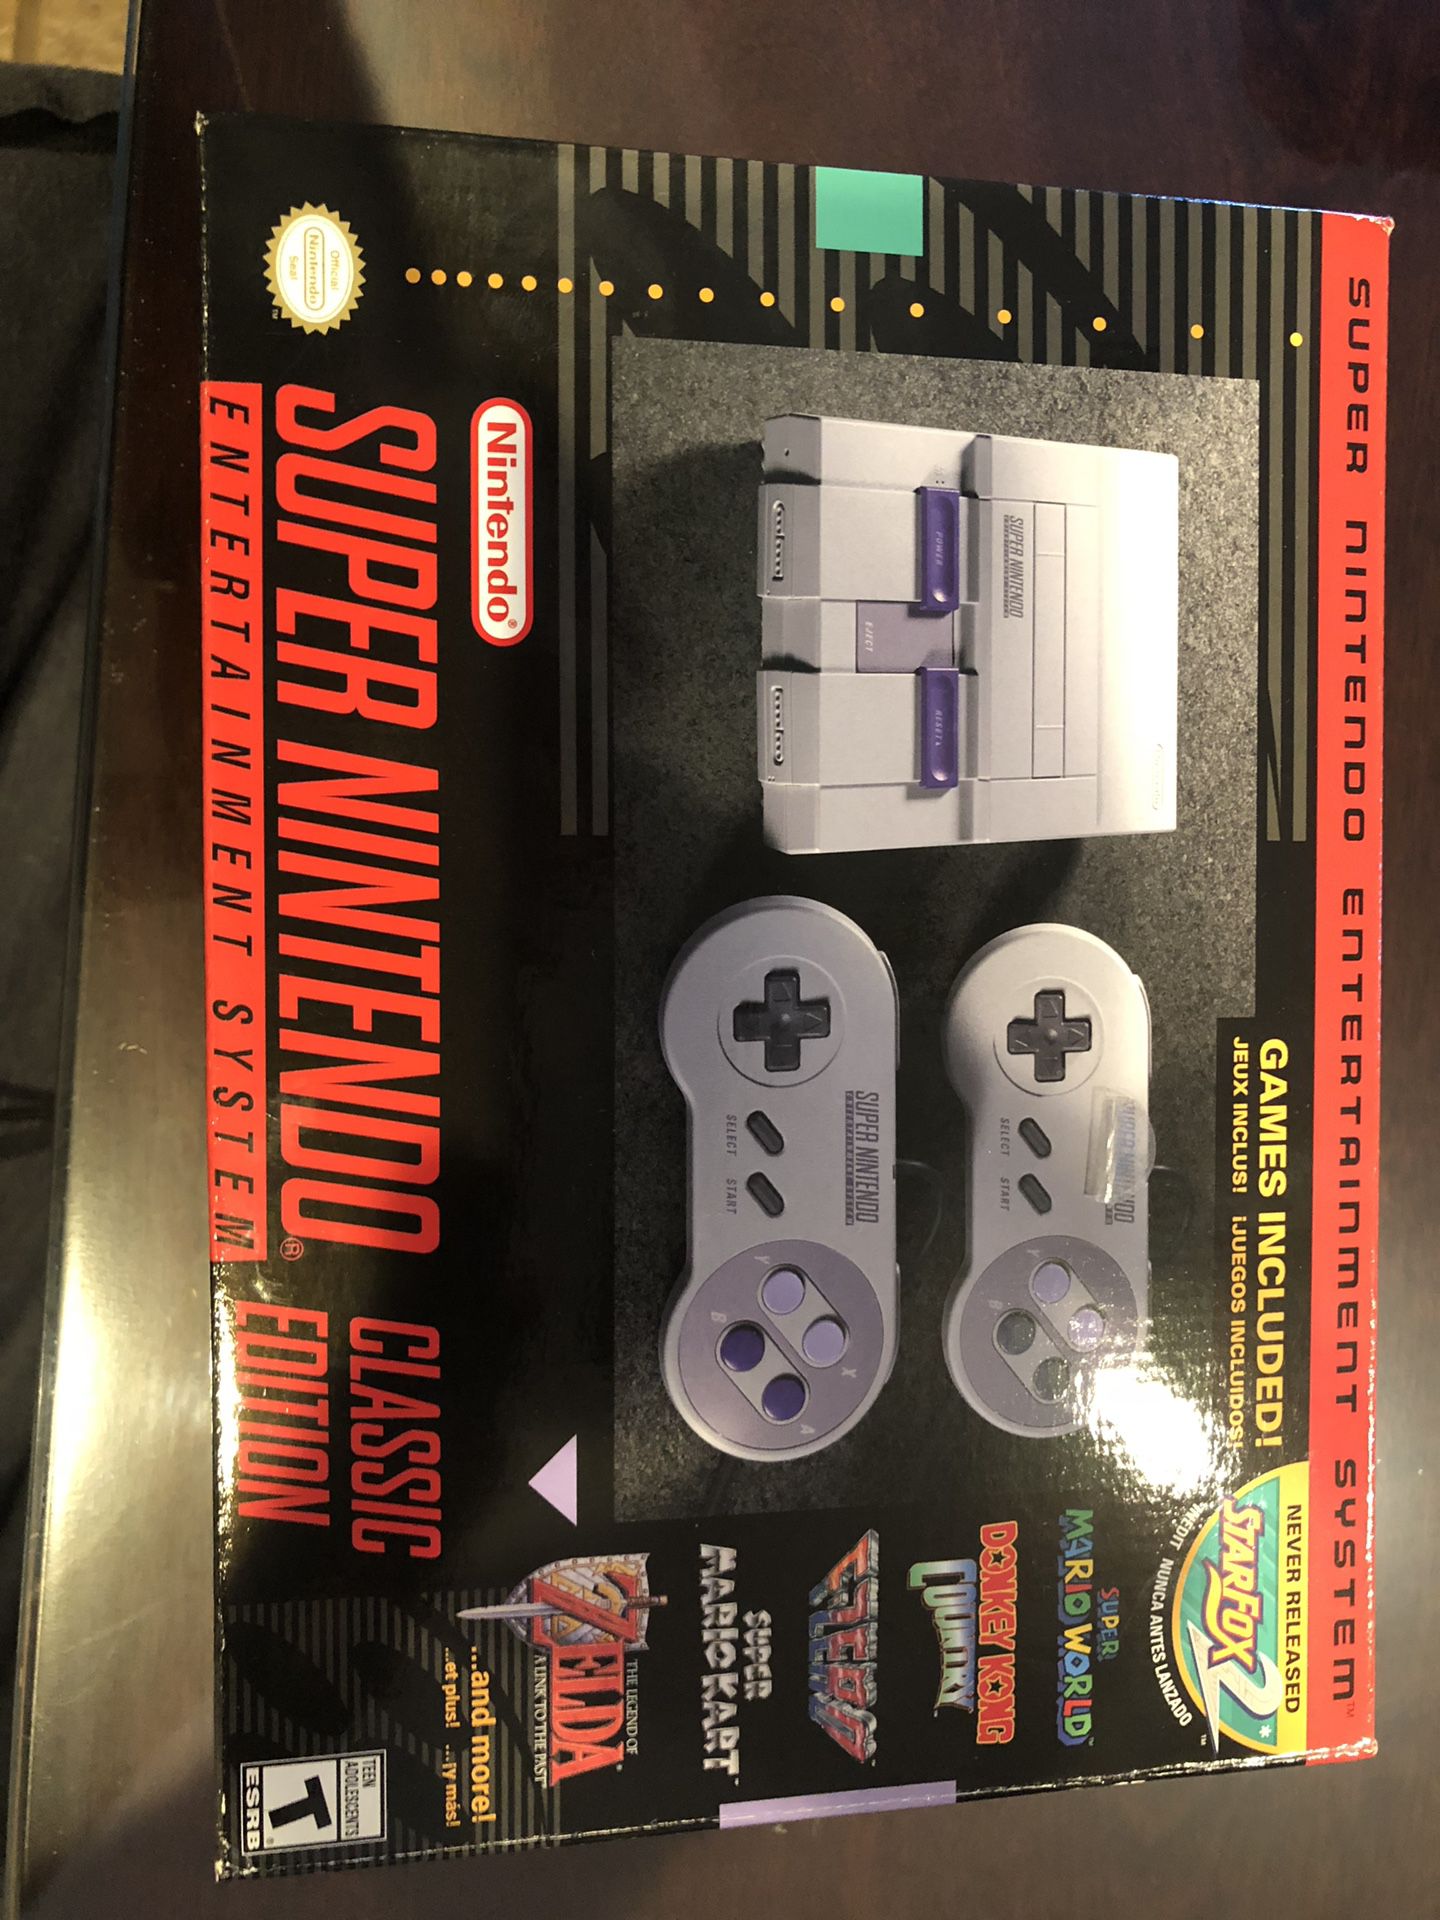 Super Nintendo classic edition brand new